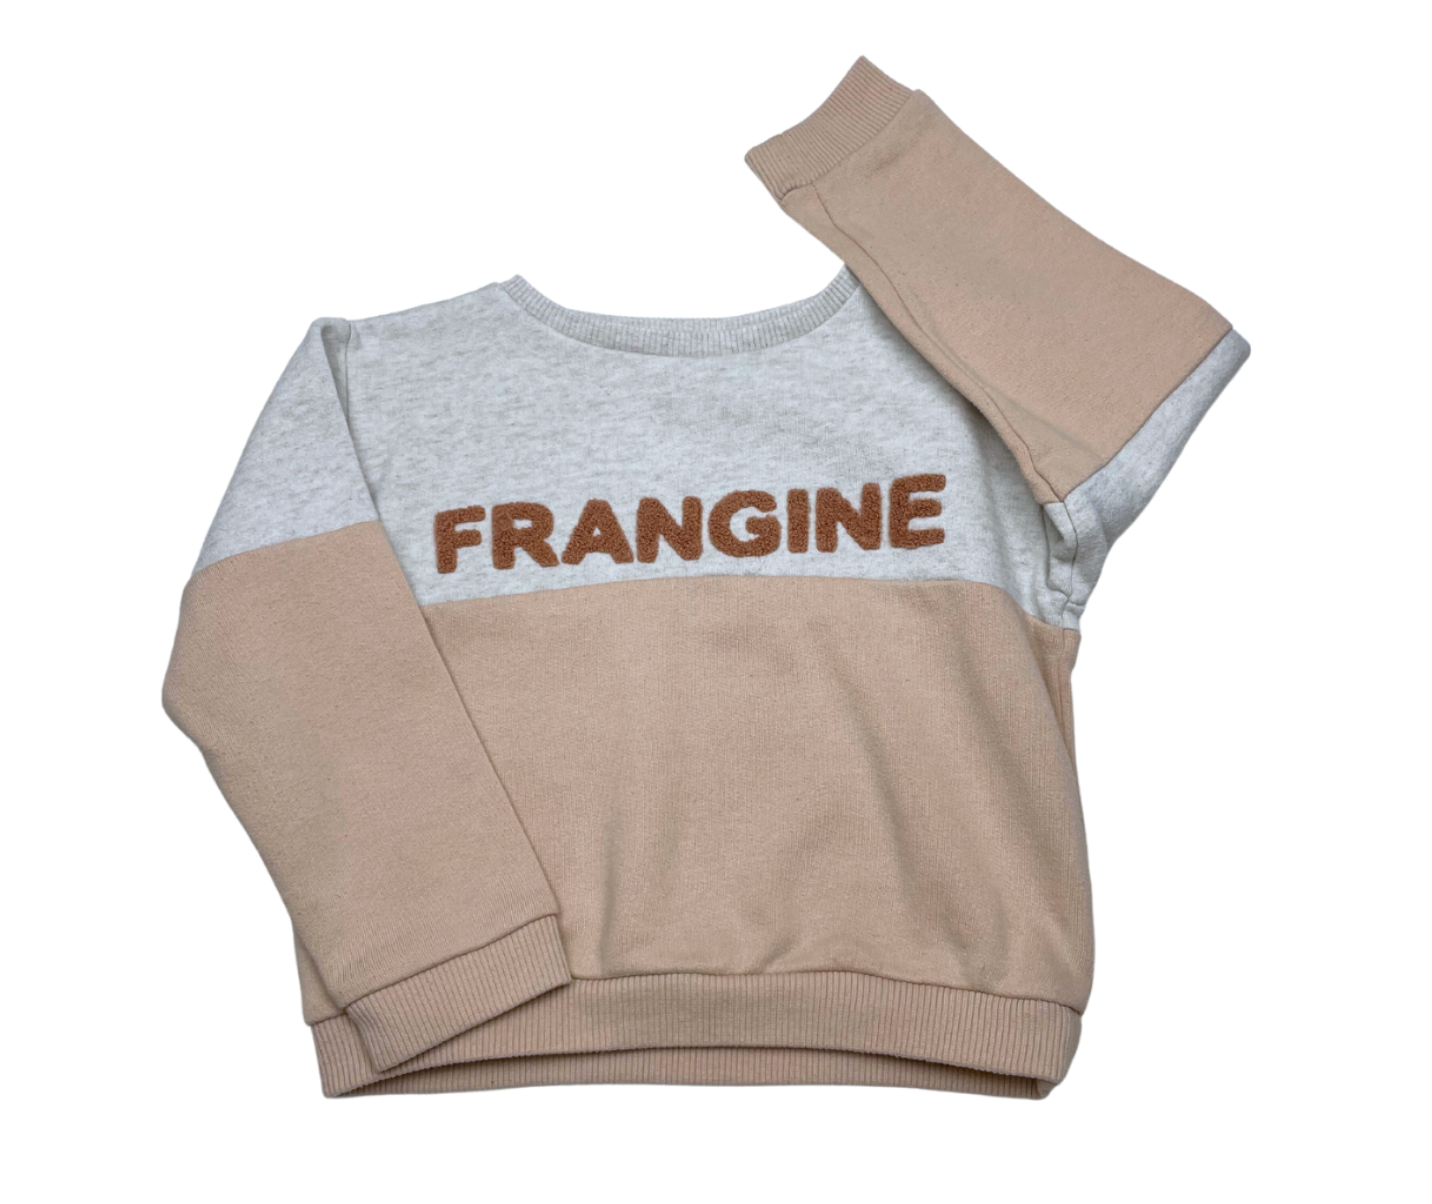 FRANGIN FRANGINE - Sweat "frangine" - 4 ans